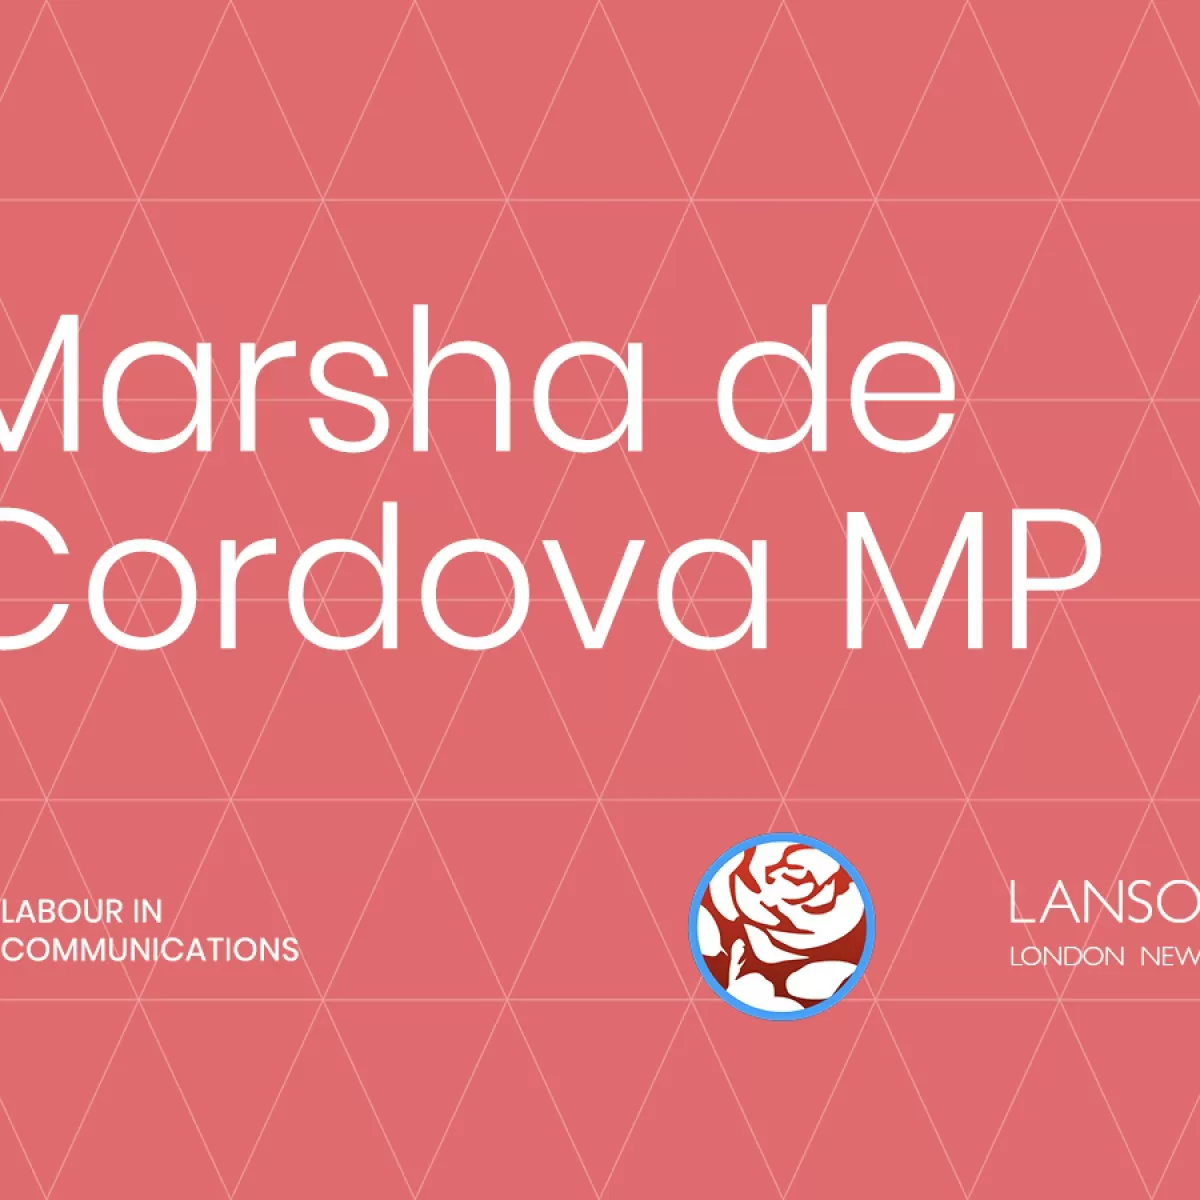 Labour in Communications event Marsha de Cordova MP Lansons LDN NY